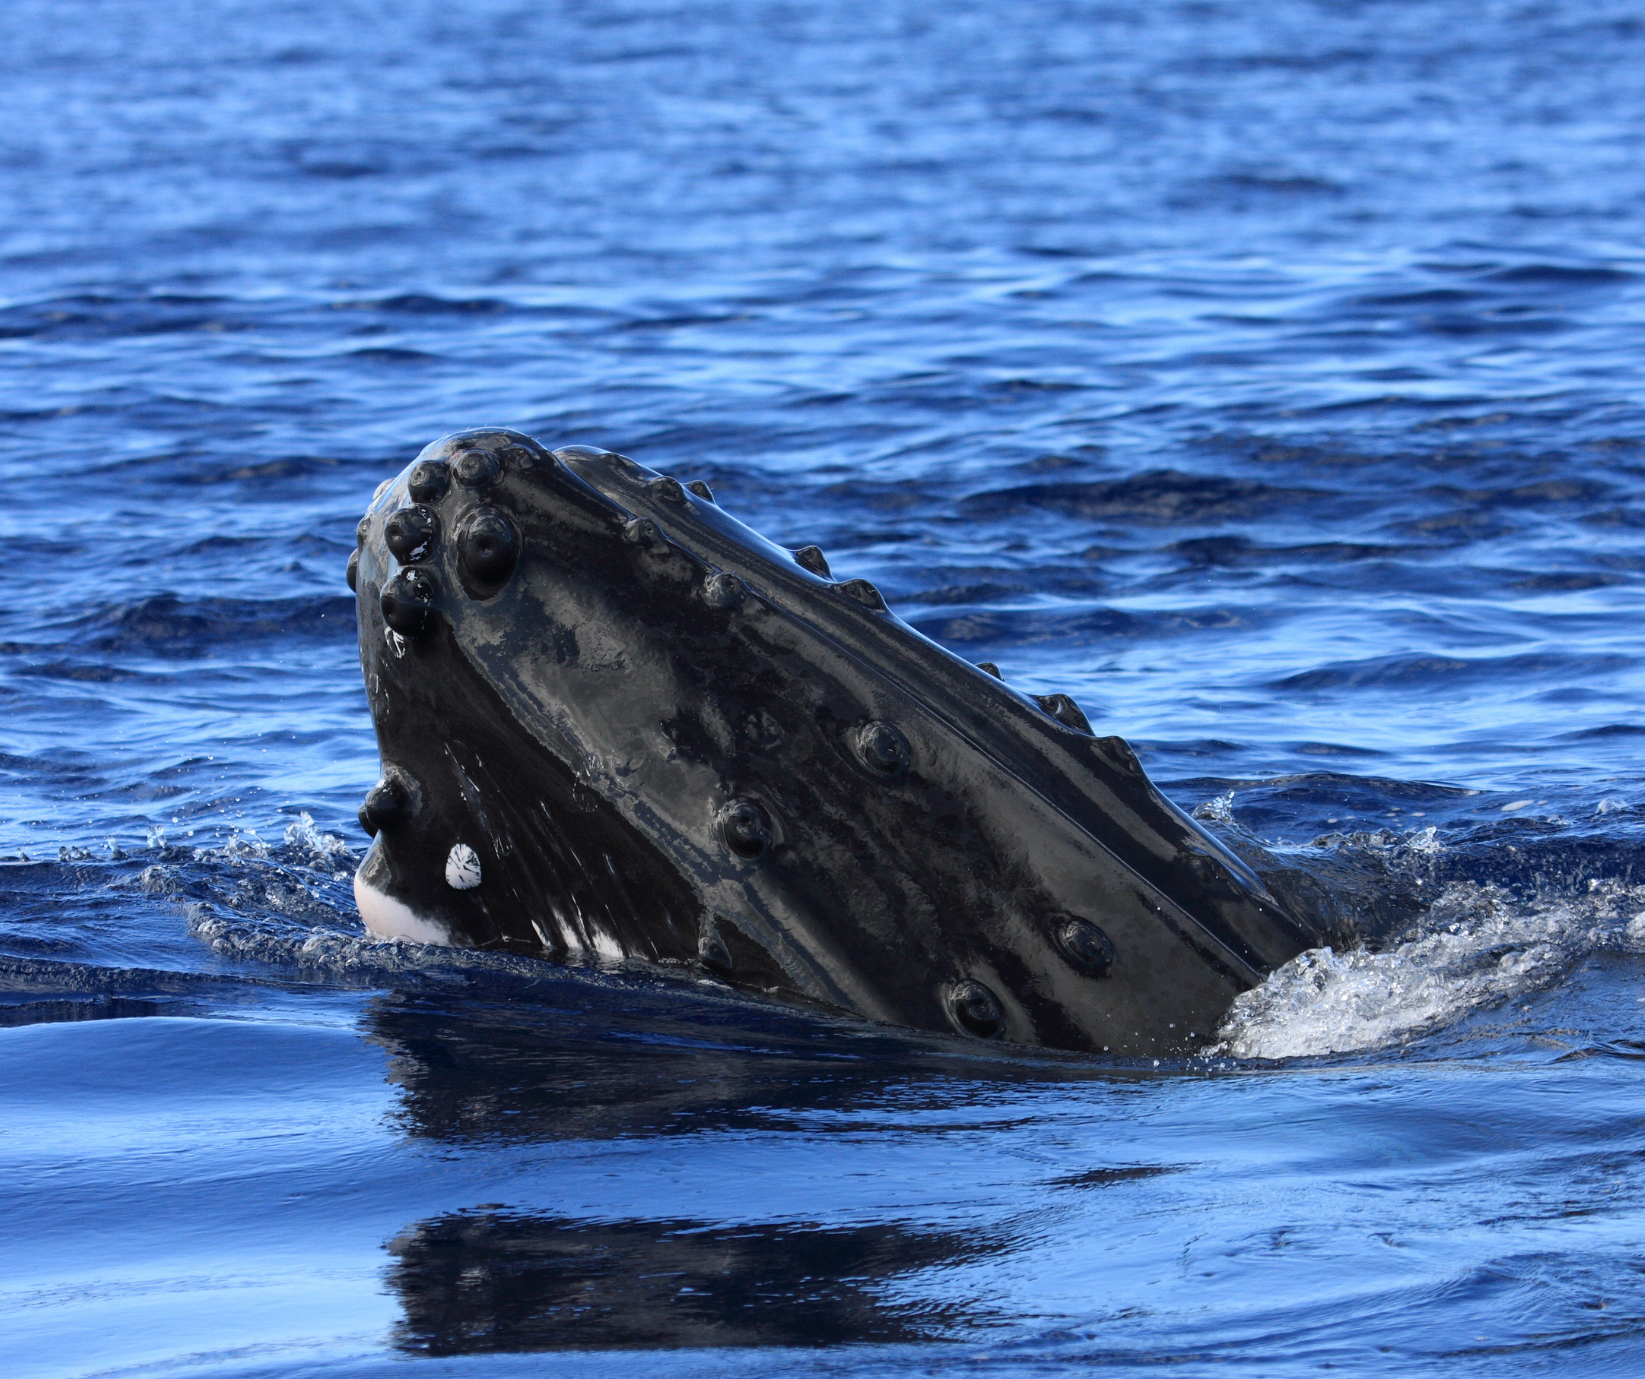 Humpback Whale Population Shows Decline, Yet Scientists Maintain Cautious Optimism